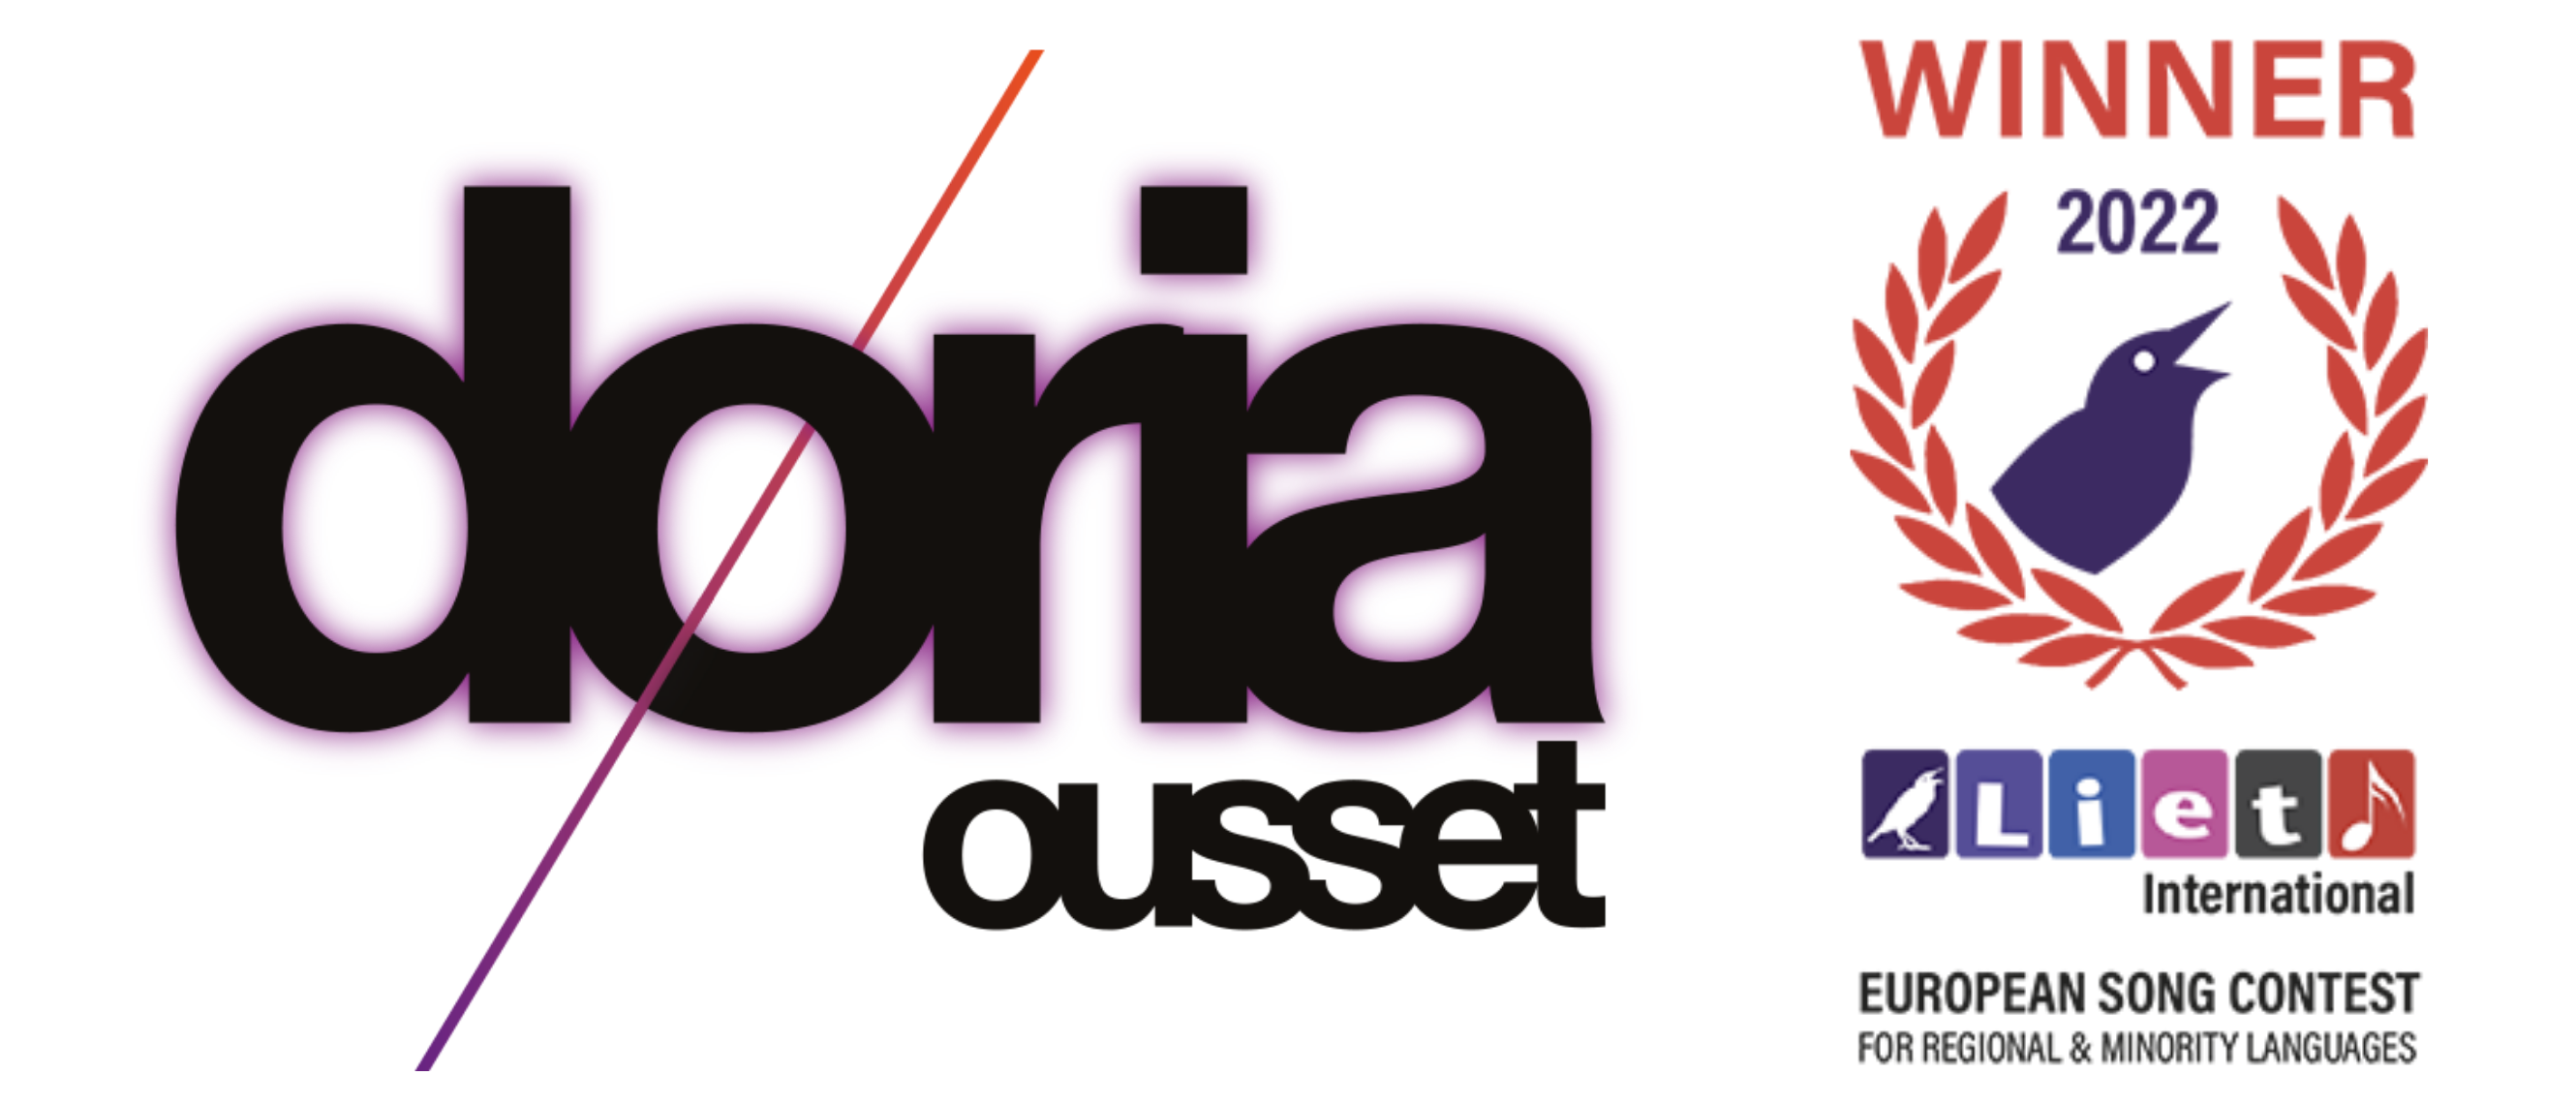 Doria Ousset